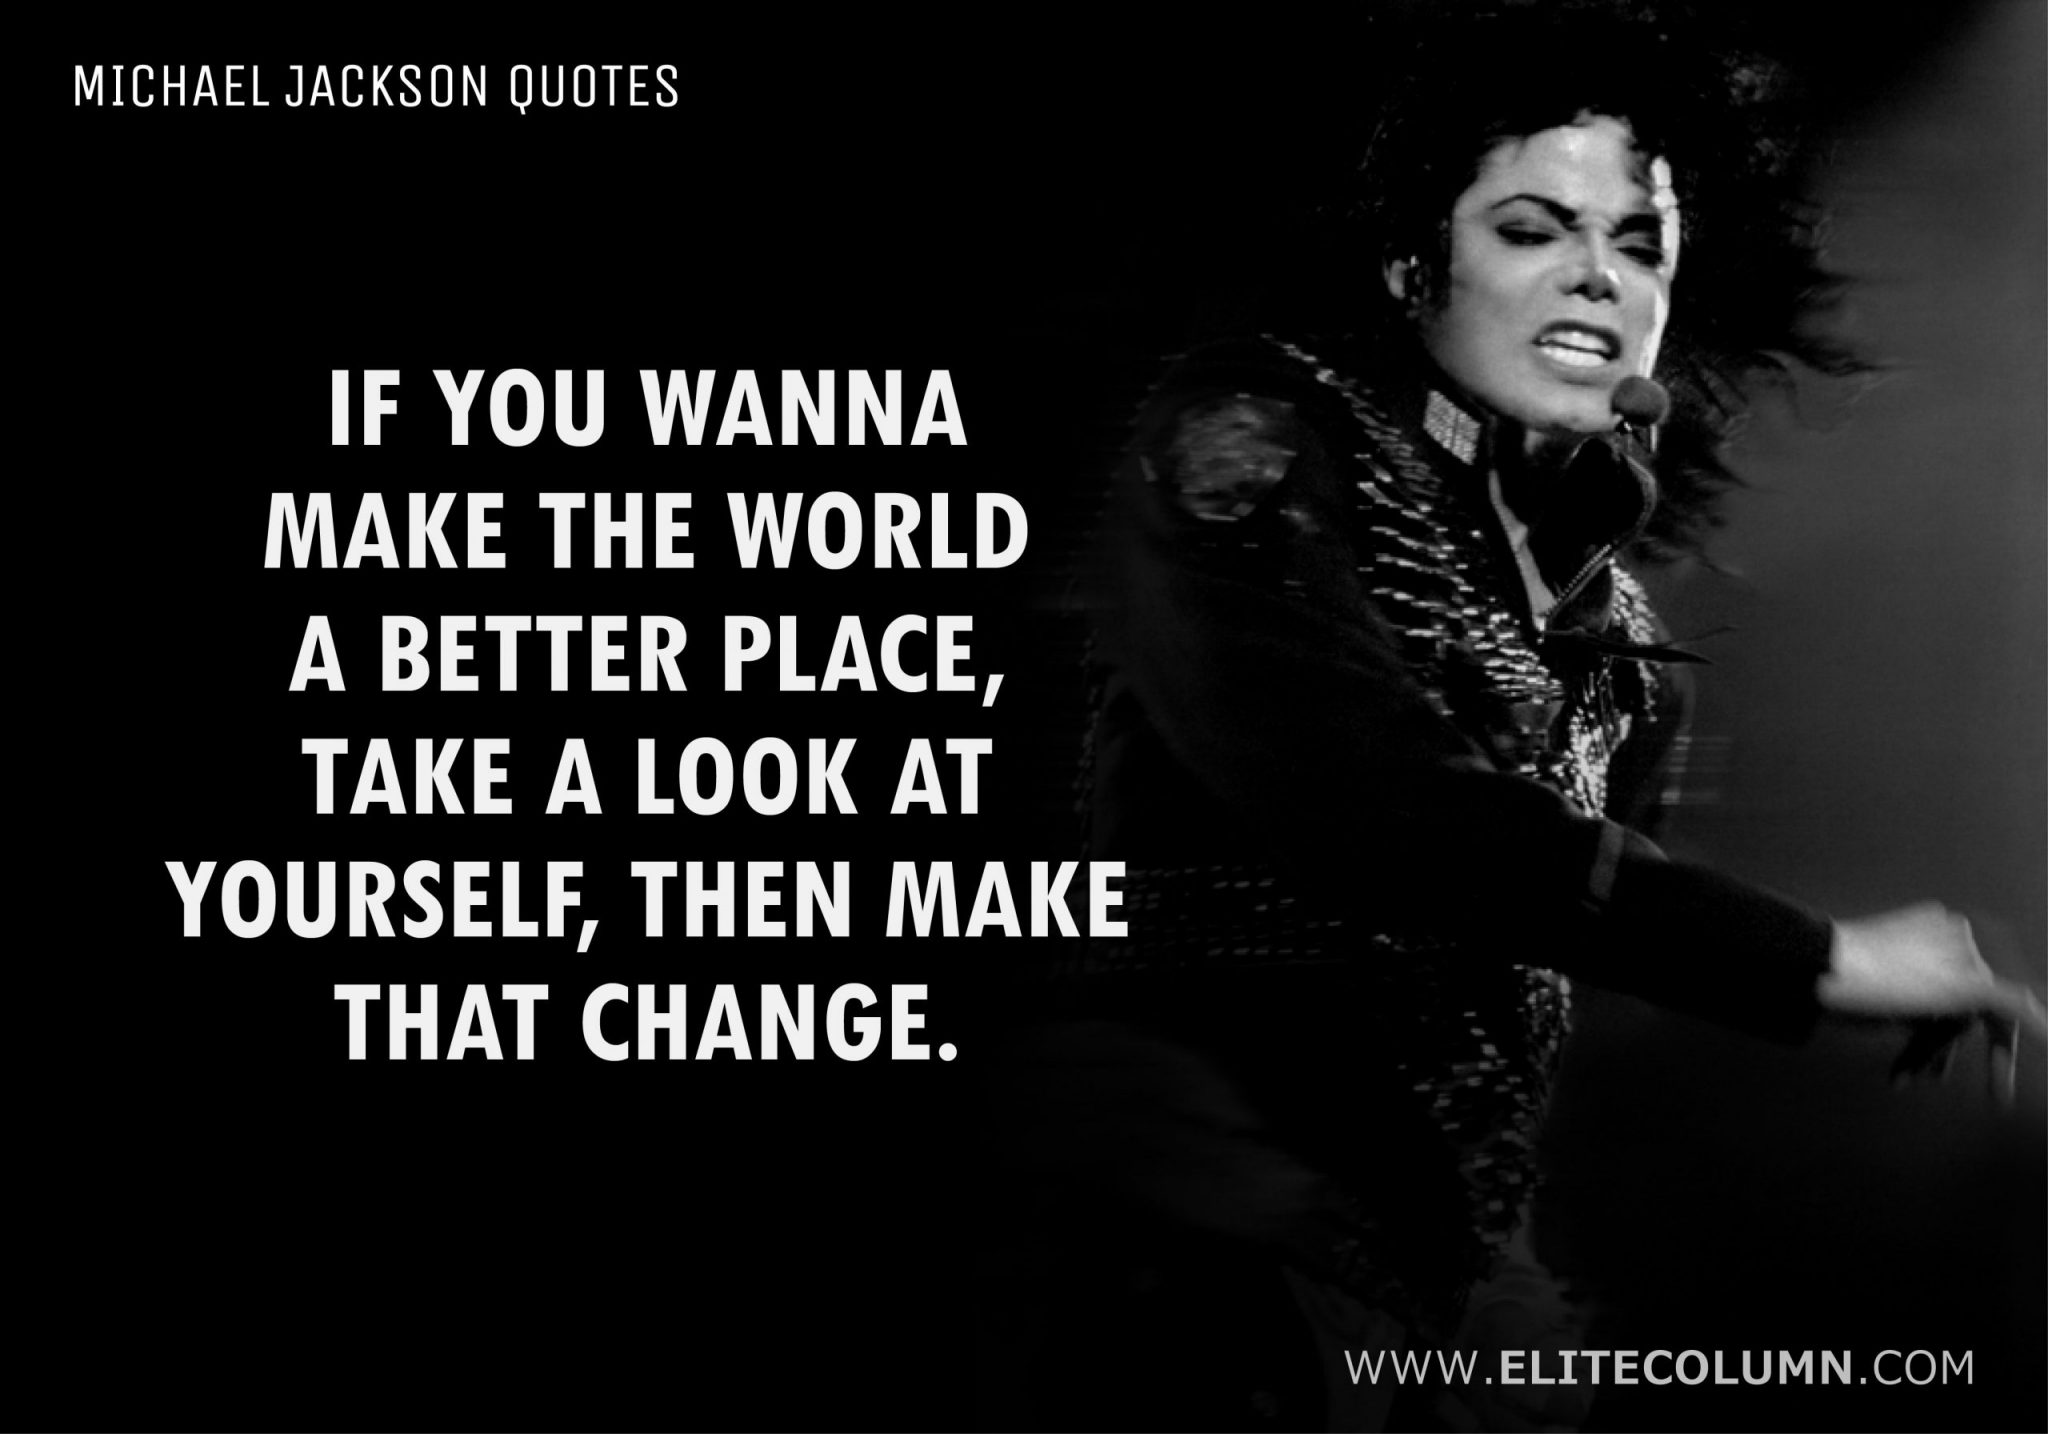 Michael Jackson Quotes (1)